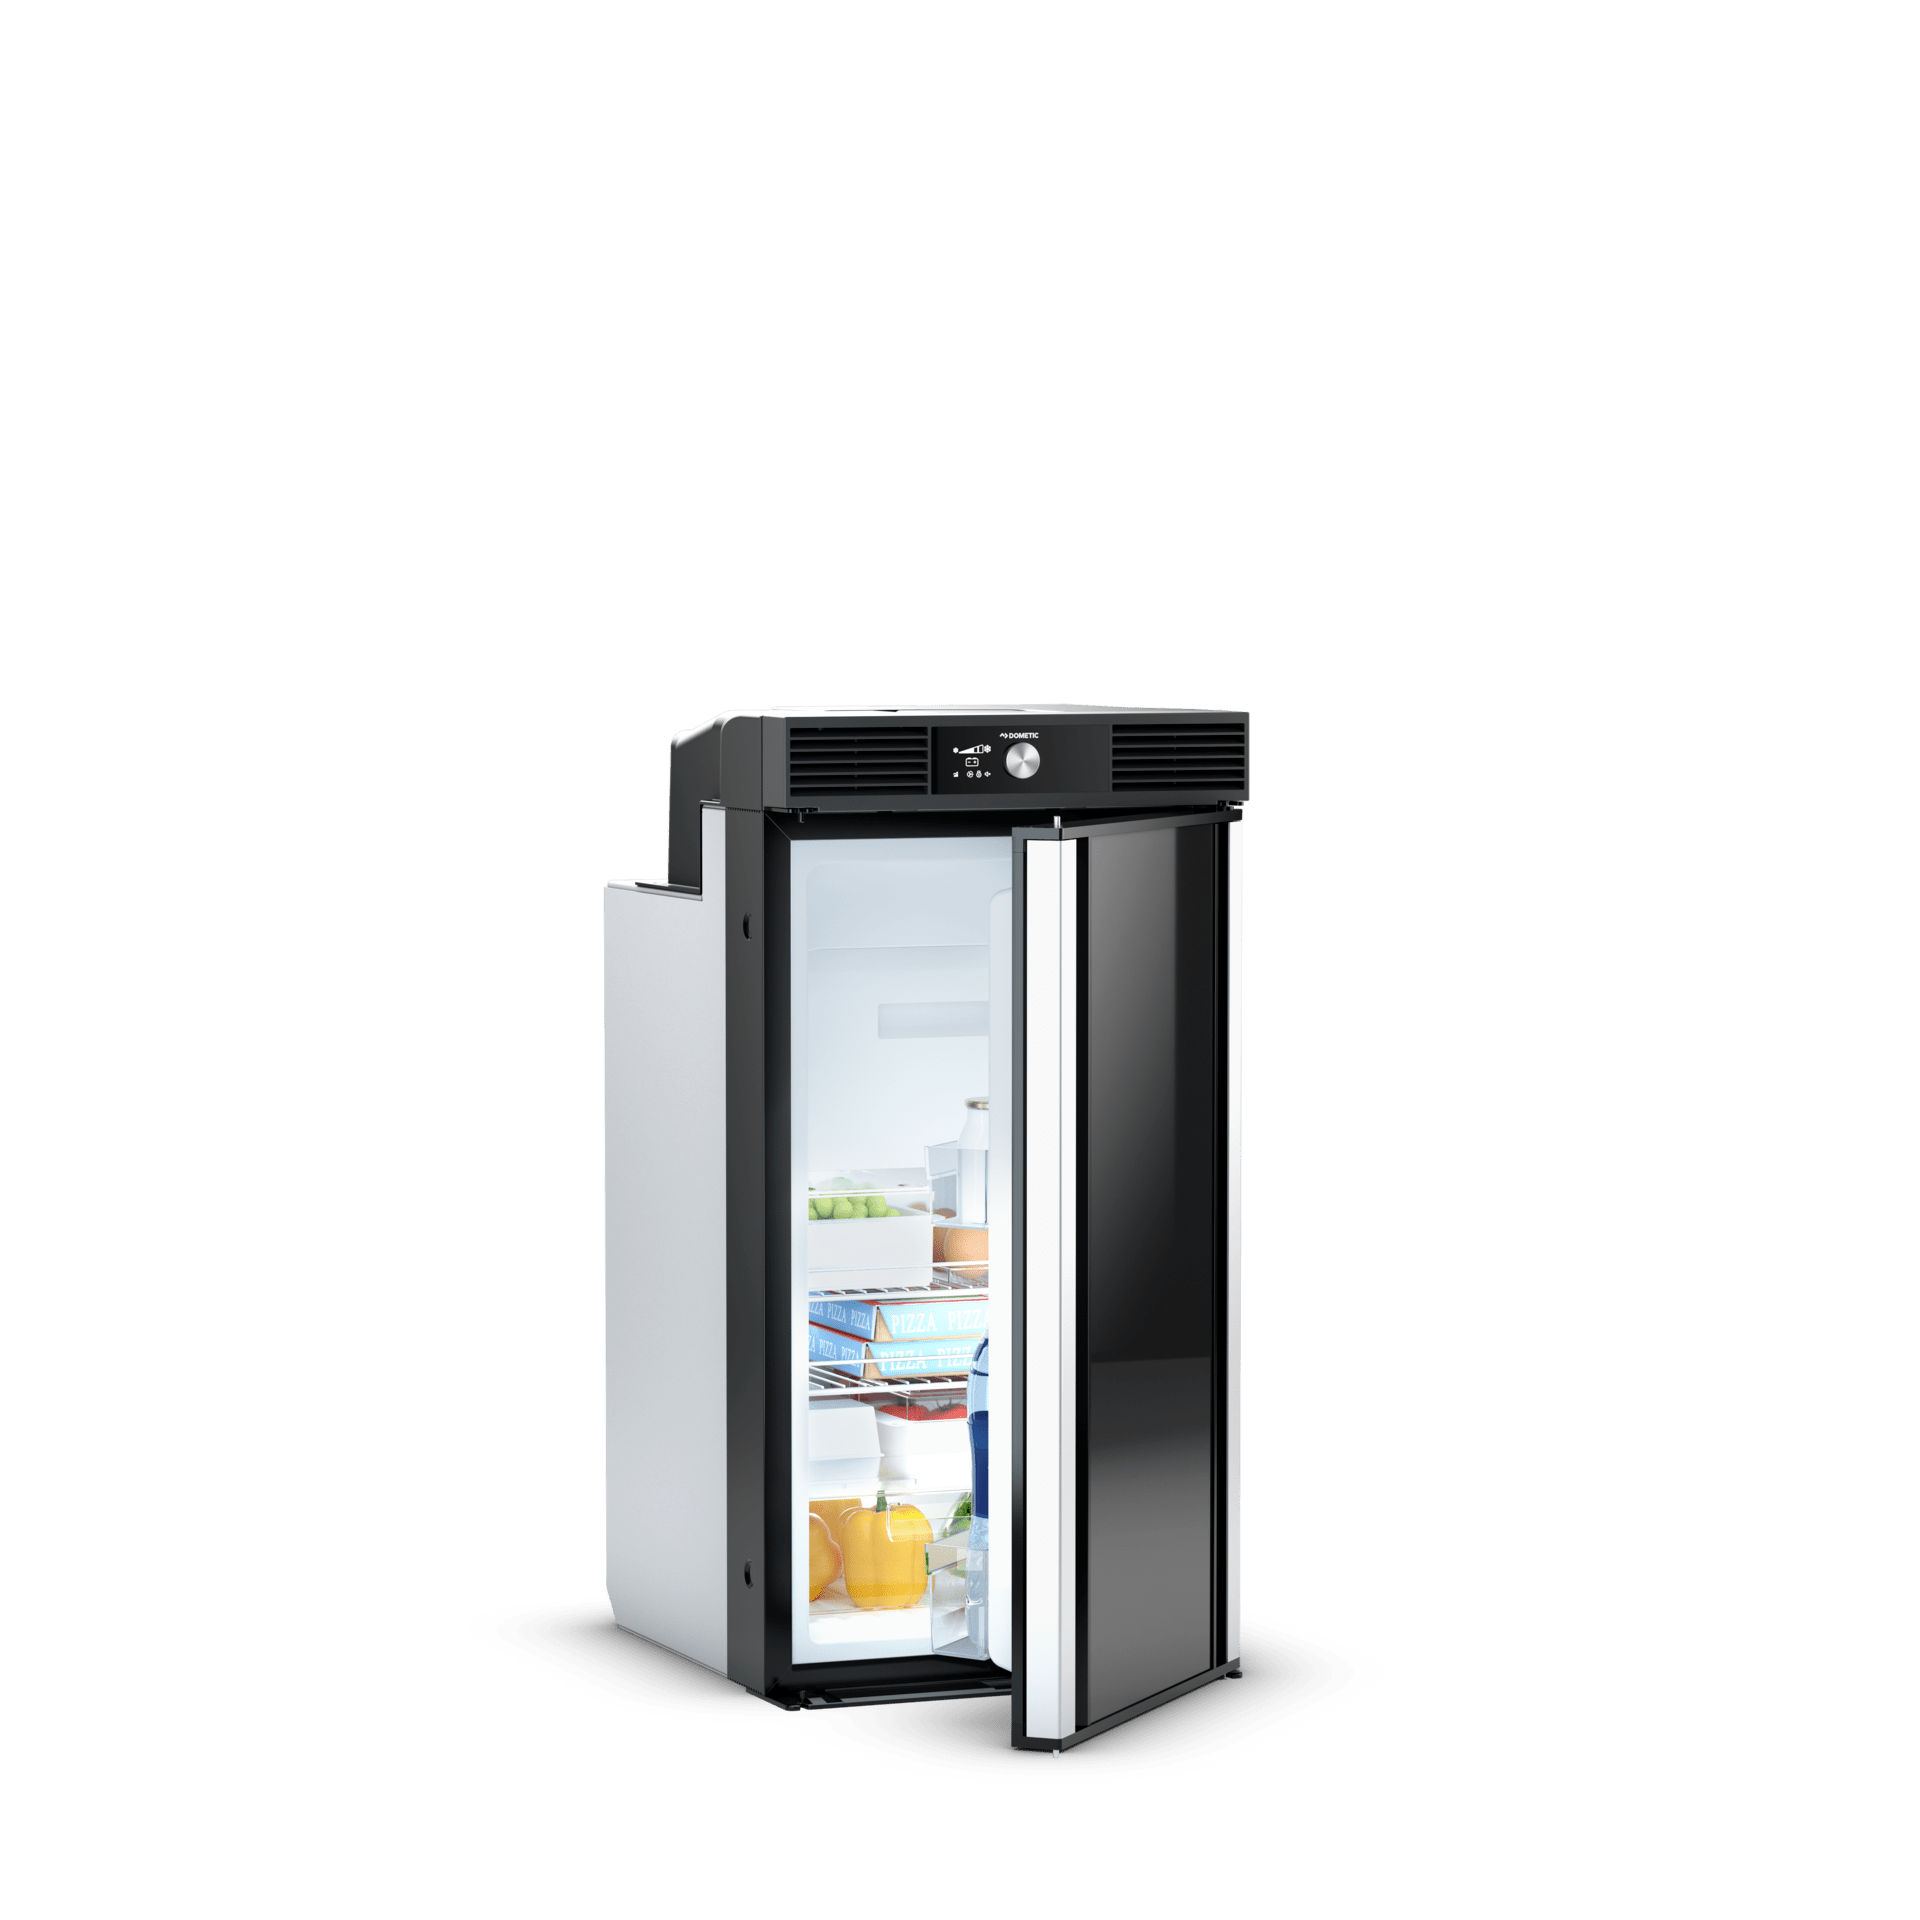 Dometic RC 10.4T 70 - Compressor refrigerator, 70 l, TFT display,  double-hinged door